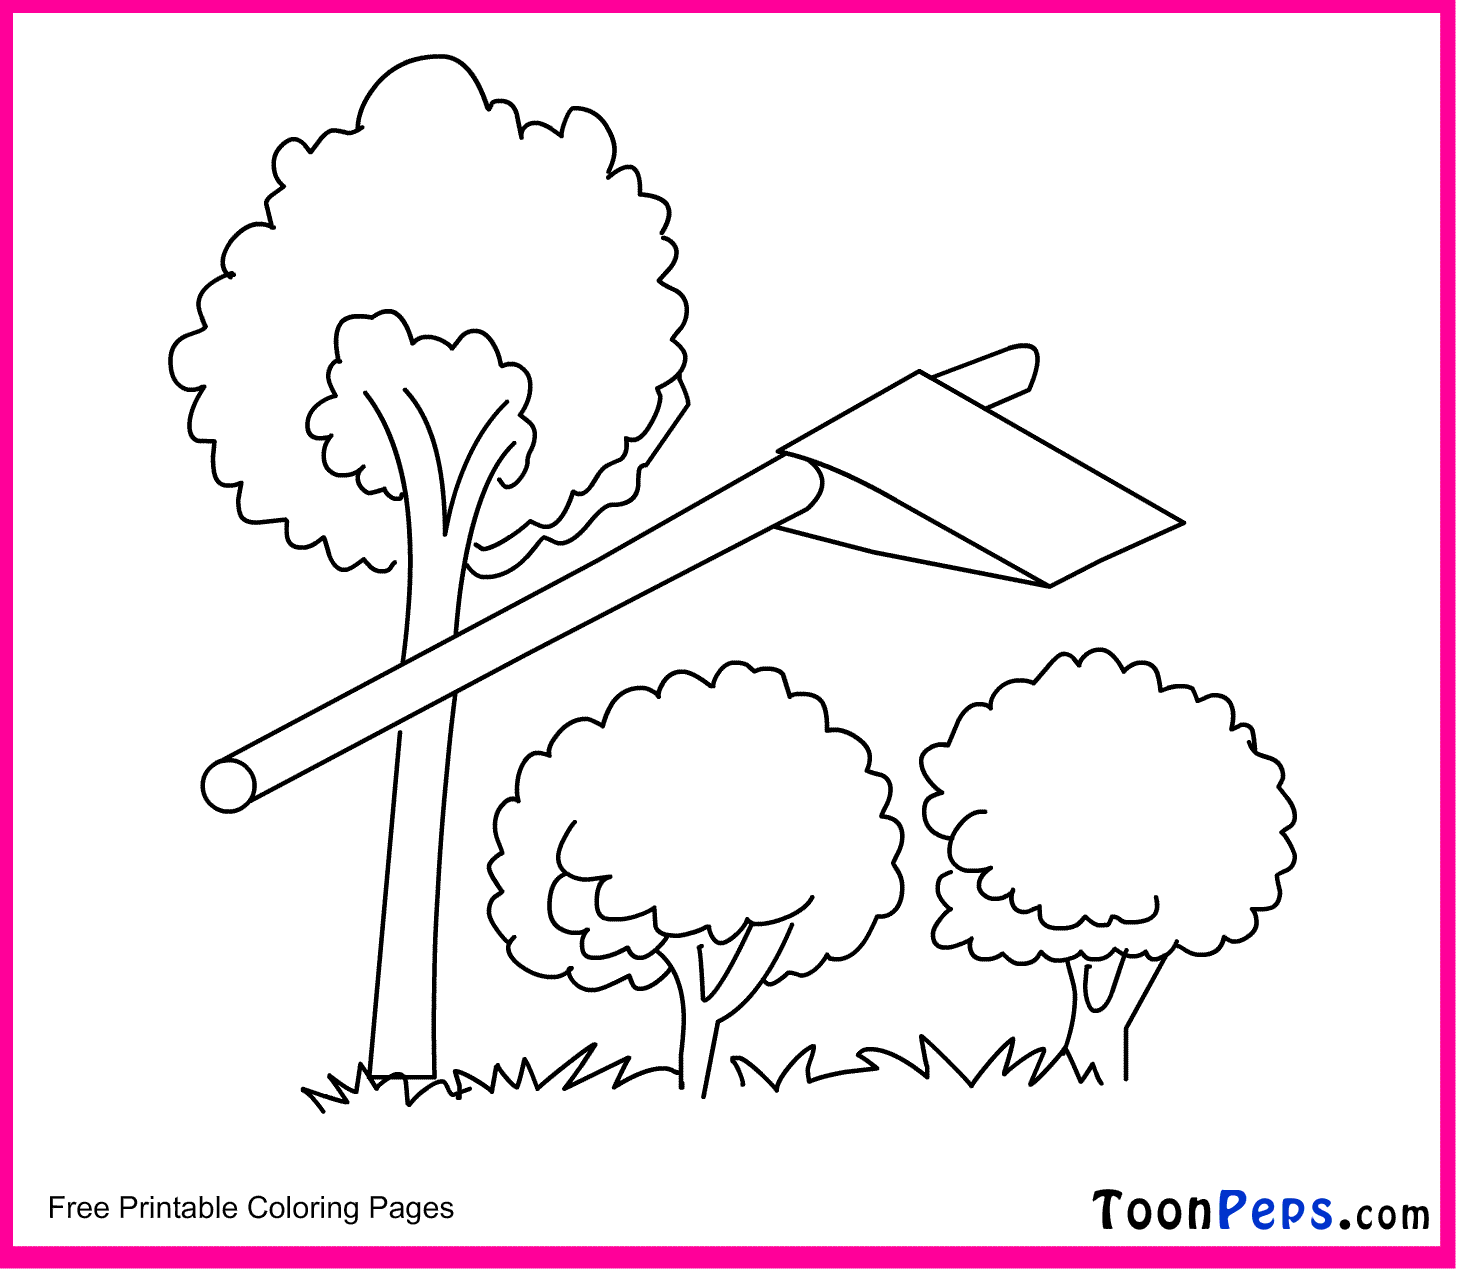 Toonpeps : Free Printable Small Tree 